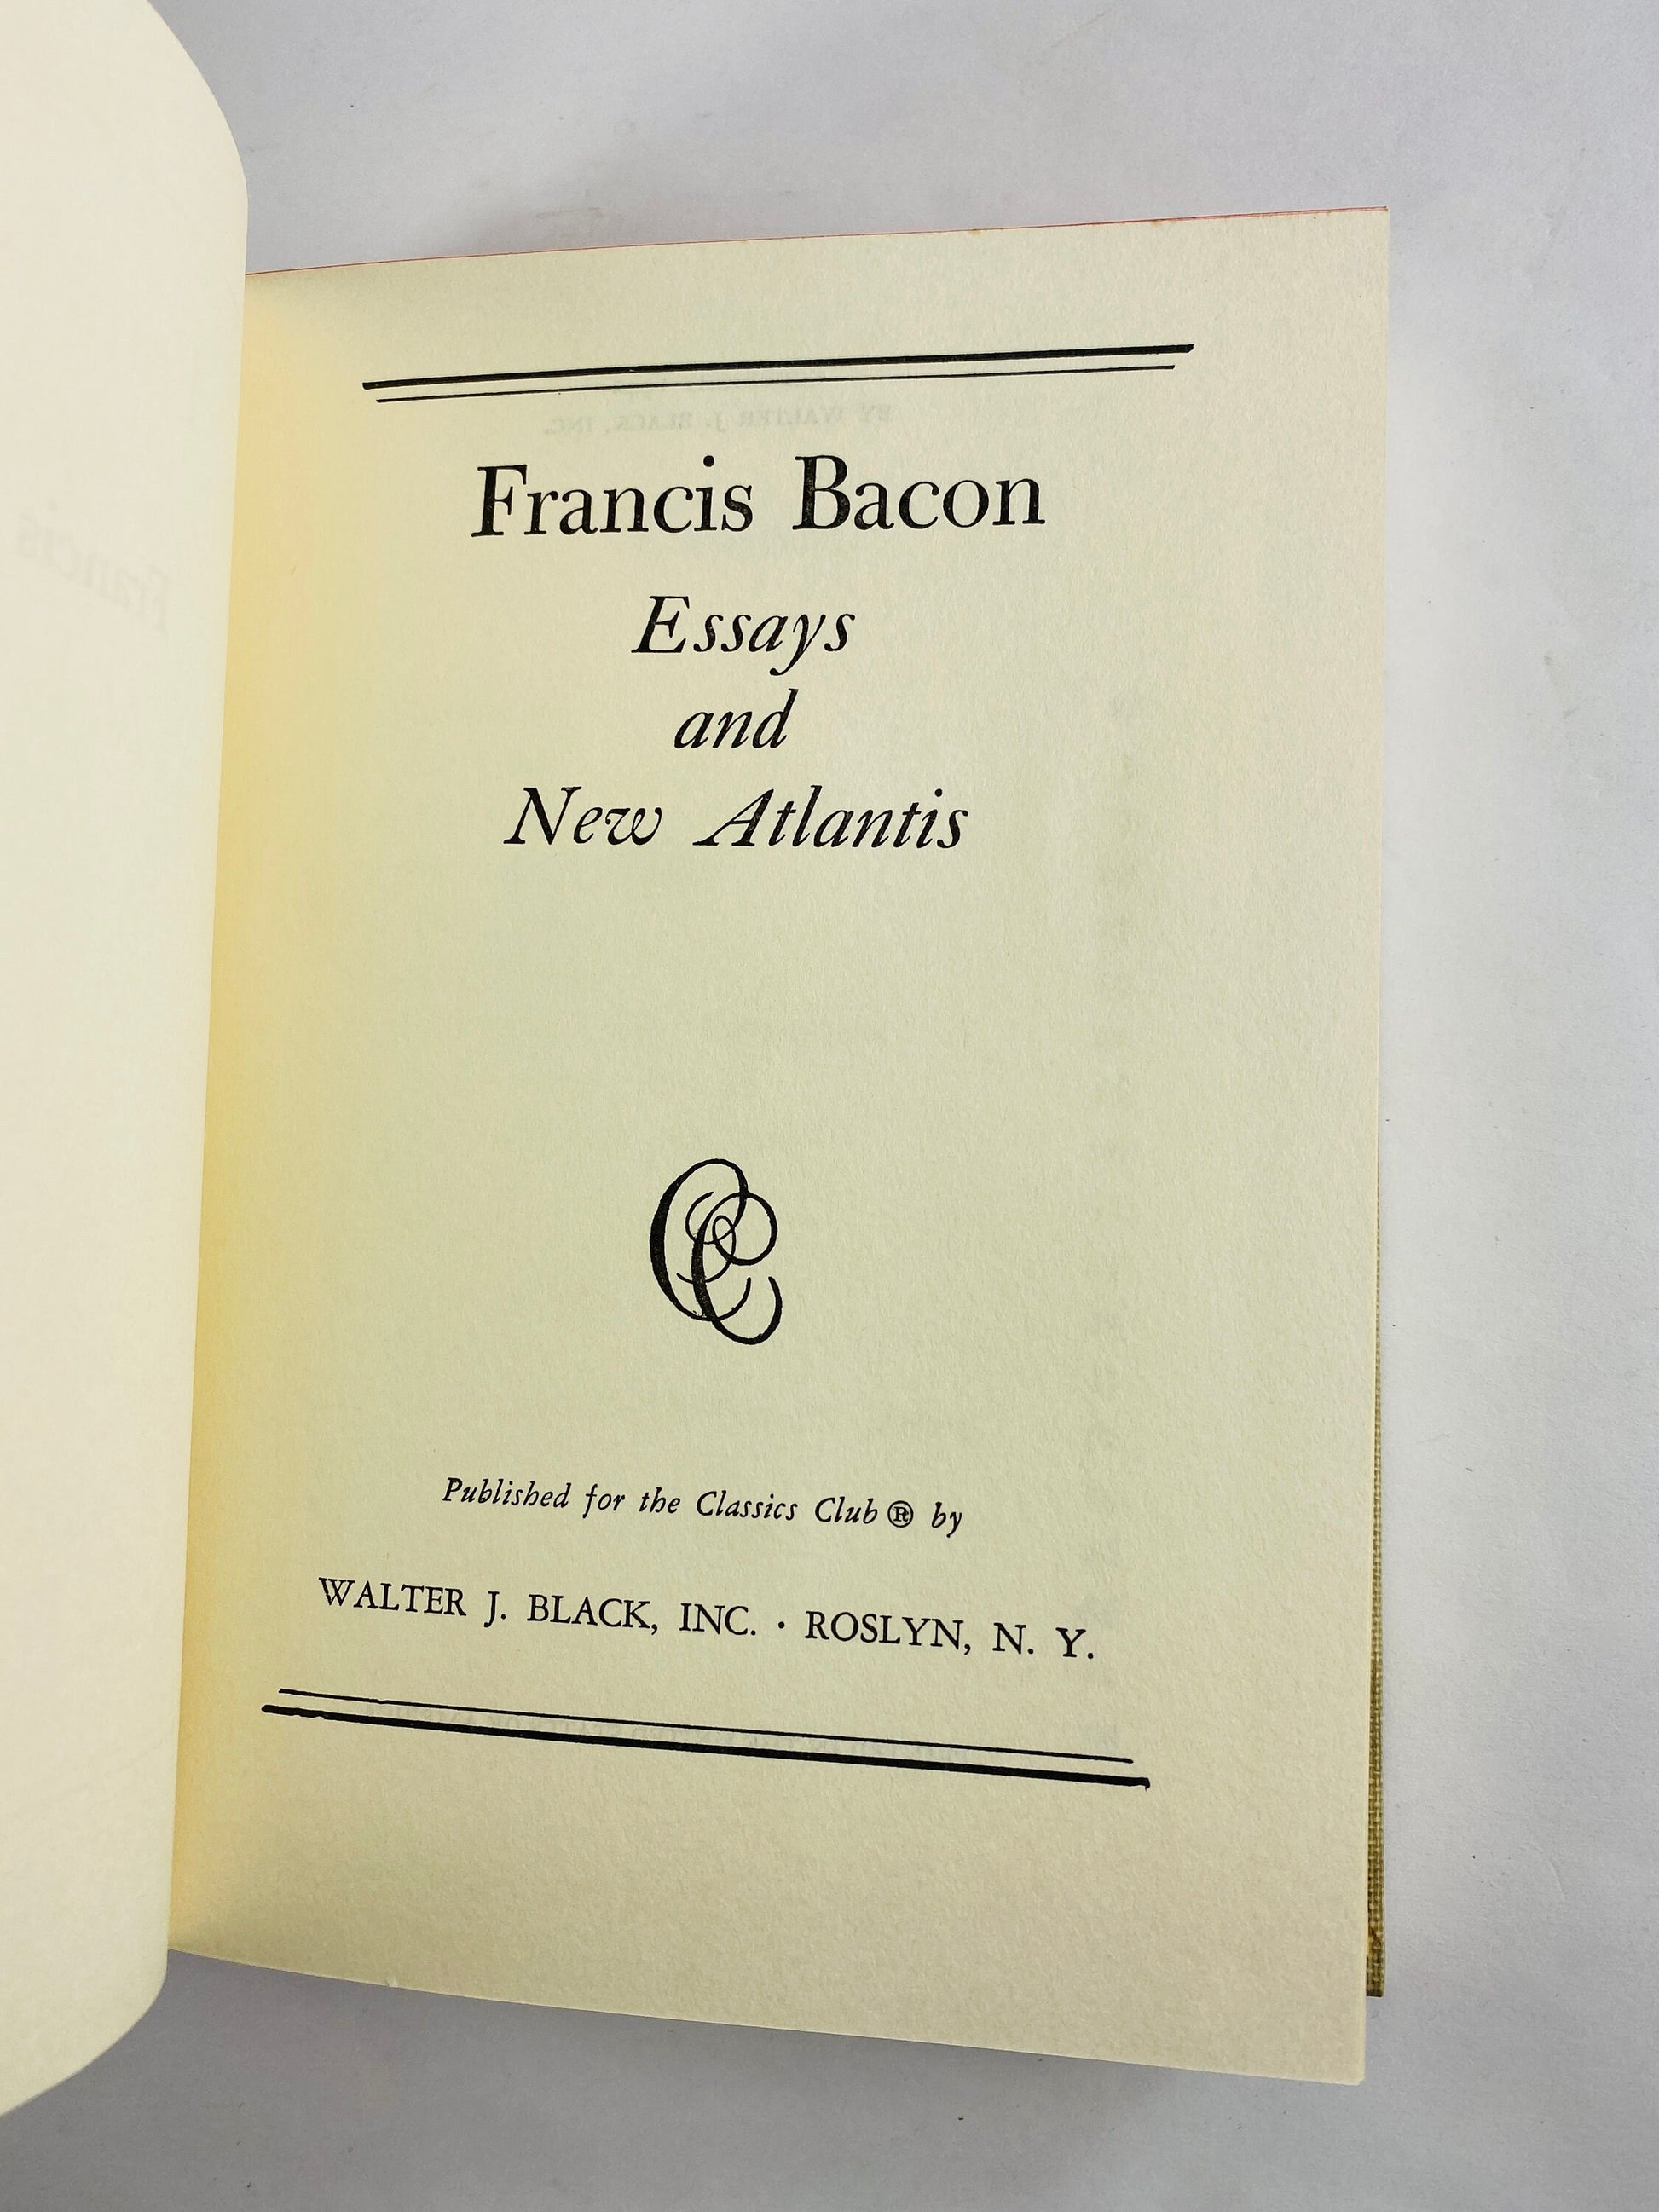 Utopian novel New Atlantis by Sir Francis Bacon, founder of the modern scientific method circa 1942. BEAUTIFUL beige vintage book decor